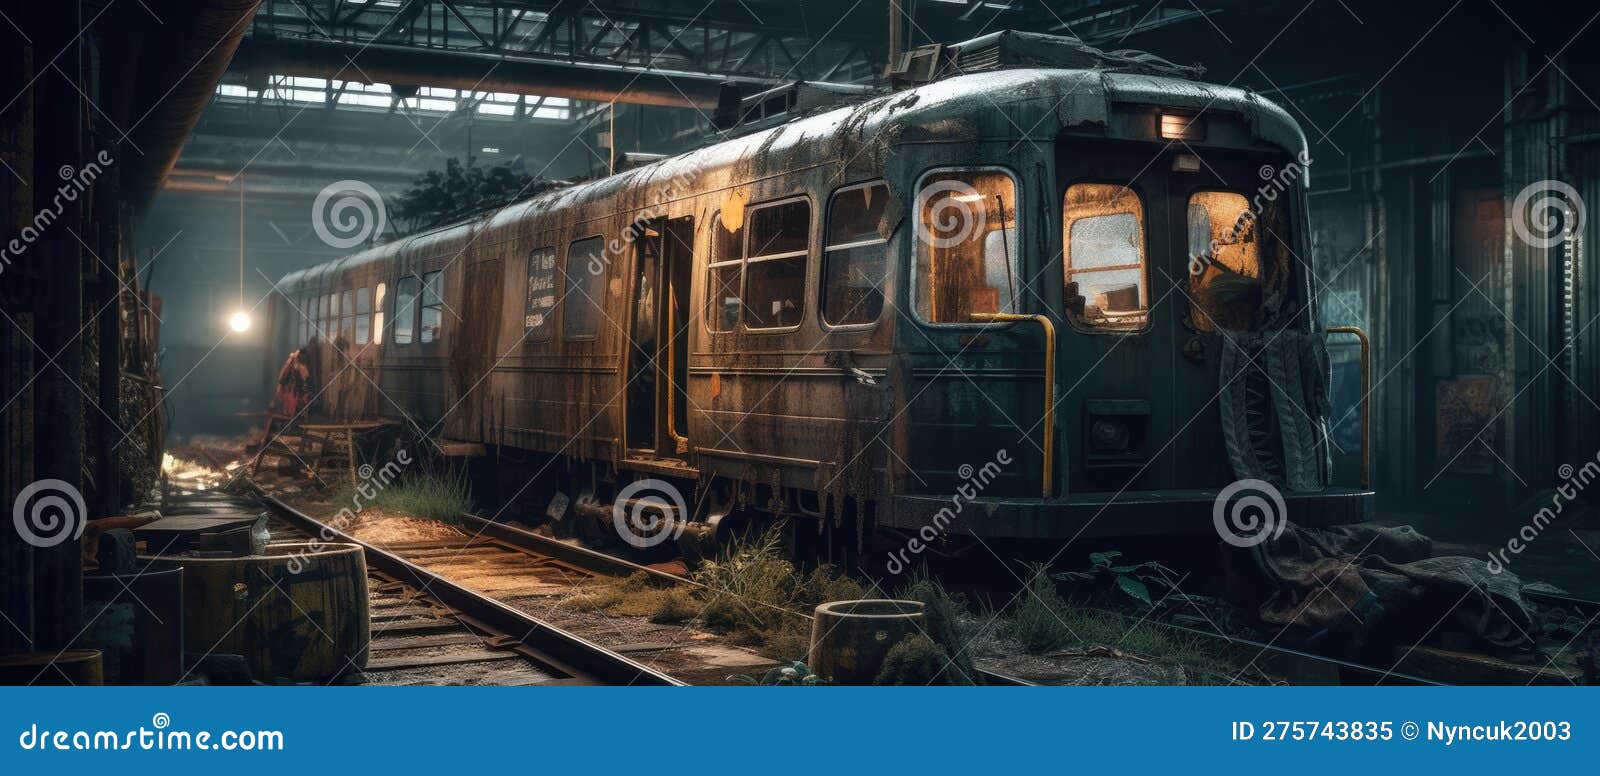 Realistic Post Apocalypse Landscape - Subway Train at Depo Stock ...